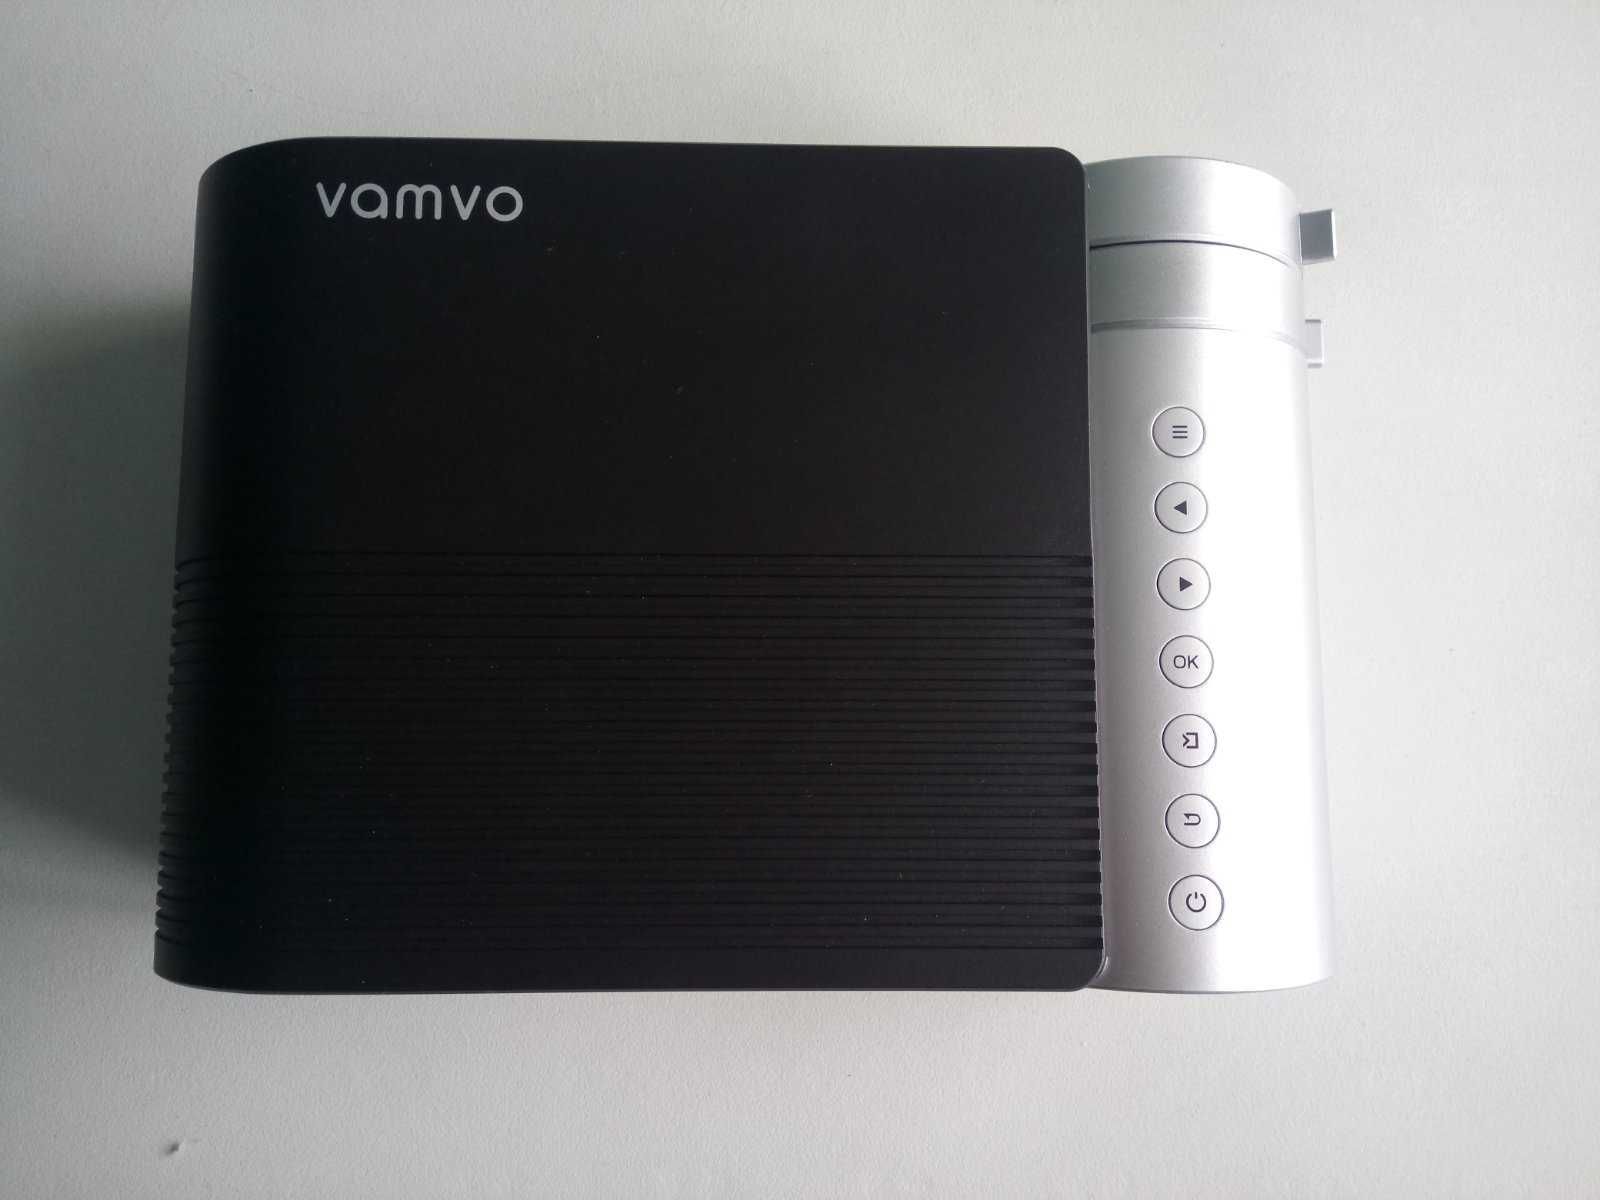 Проектор VAMVO L4200